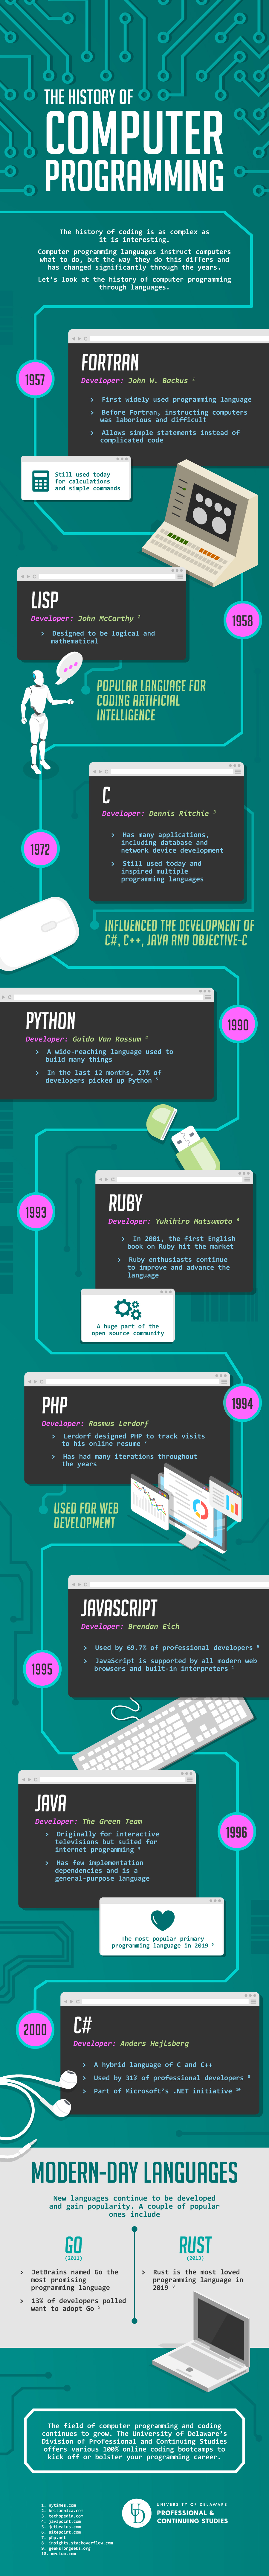 history of basic programming language